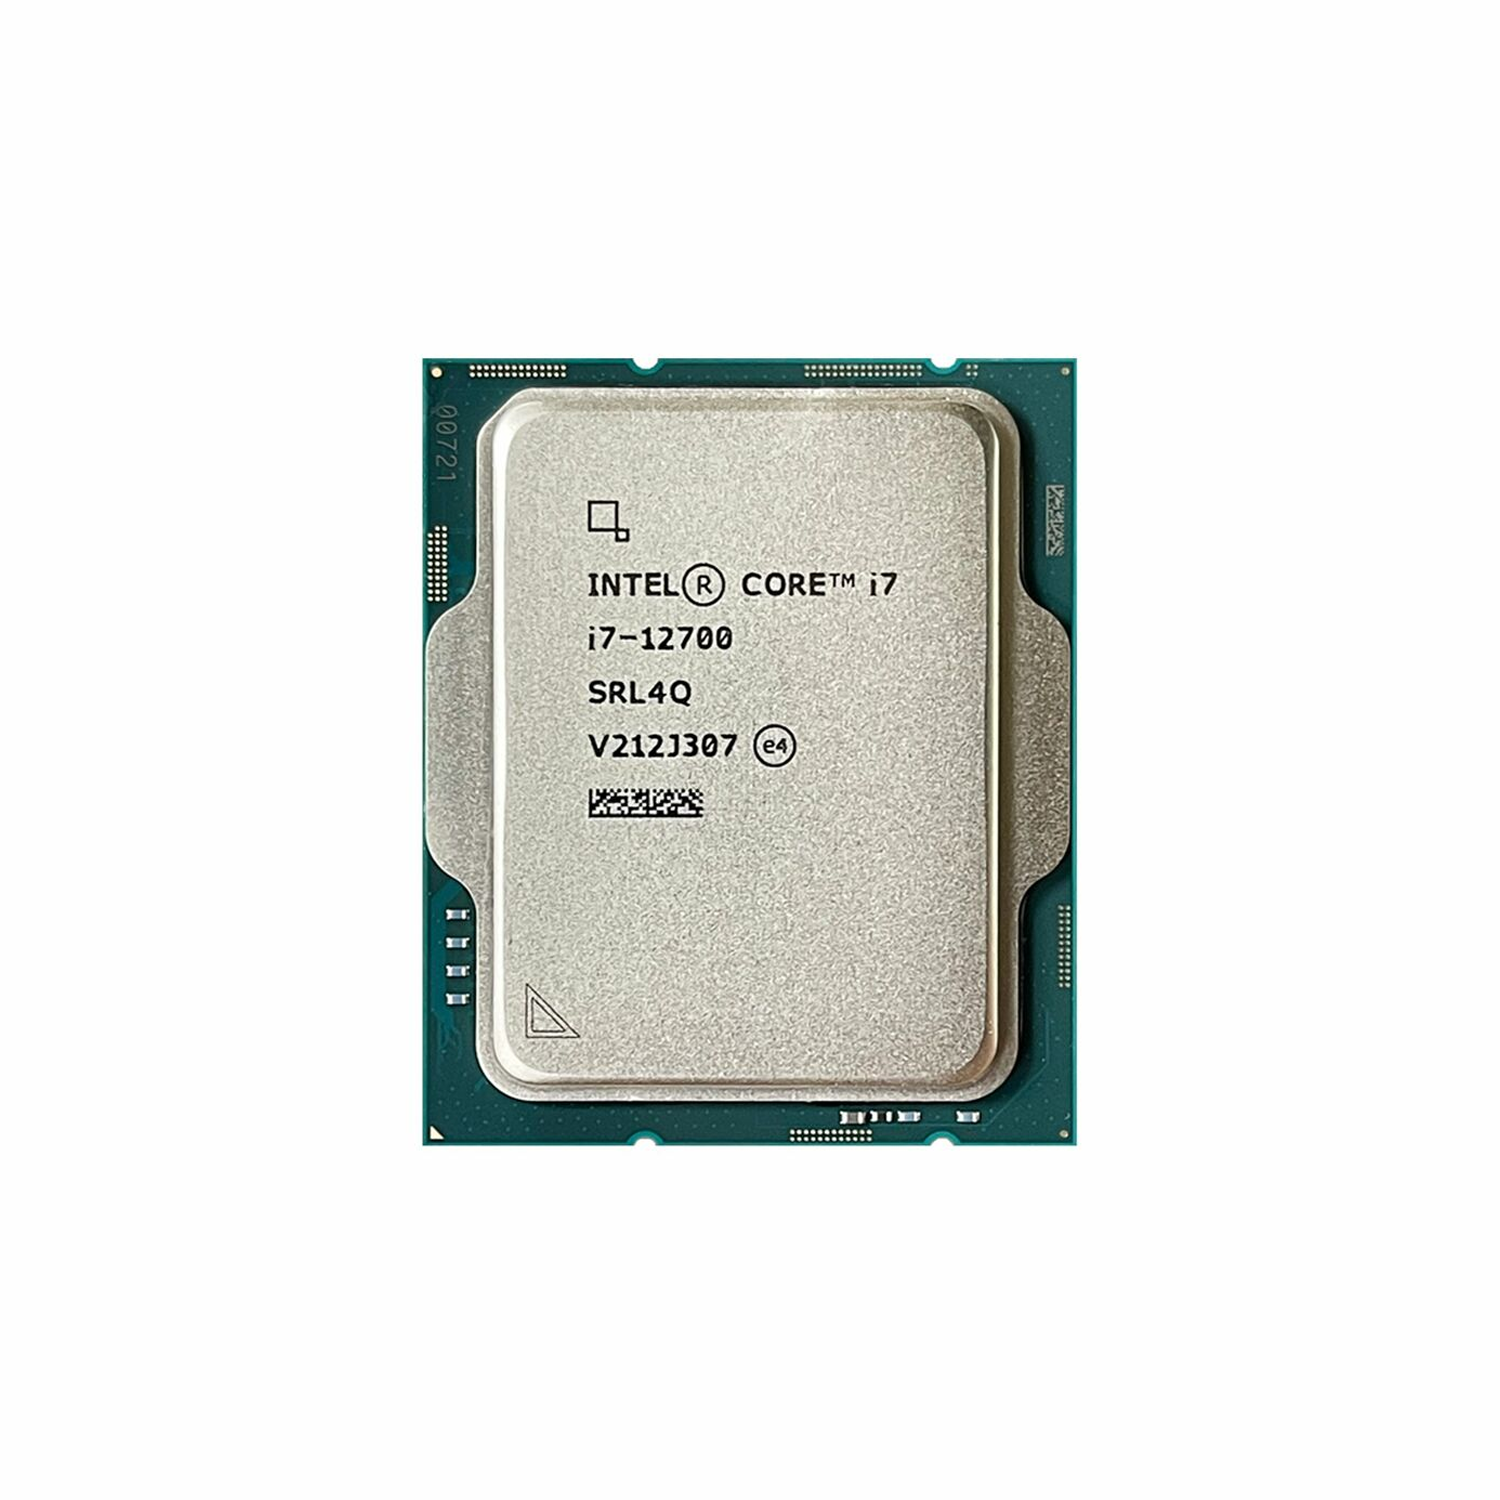 Intel Core i7-12700 Processor (25M Cache, up to 4.90 GHz) /No 